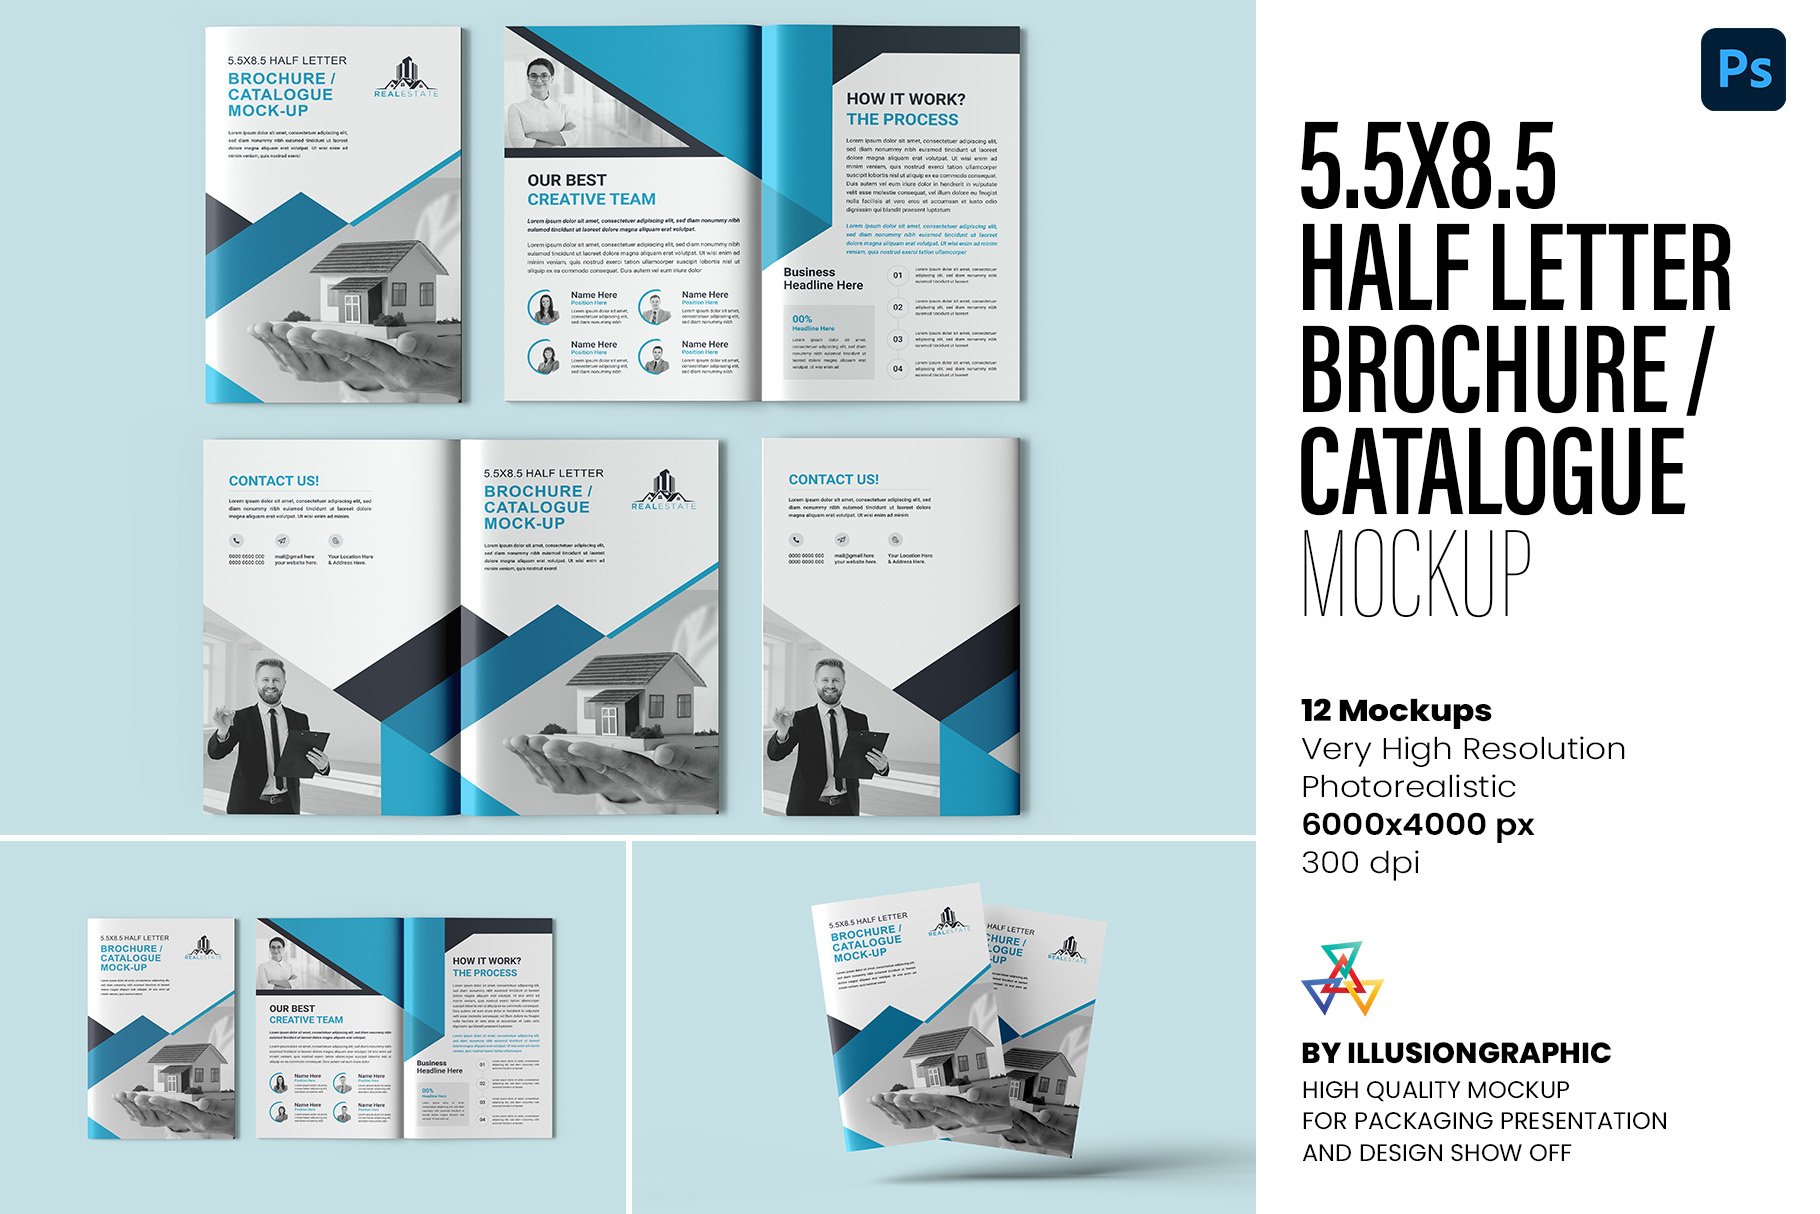 5.5x8.5 Brochure / Catalogue Mockup cover image.